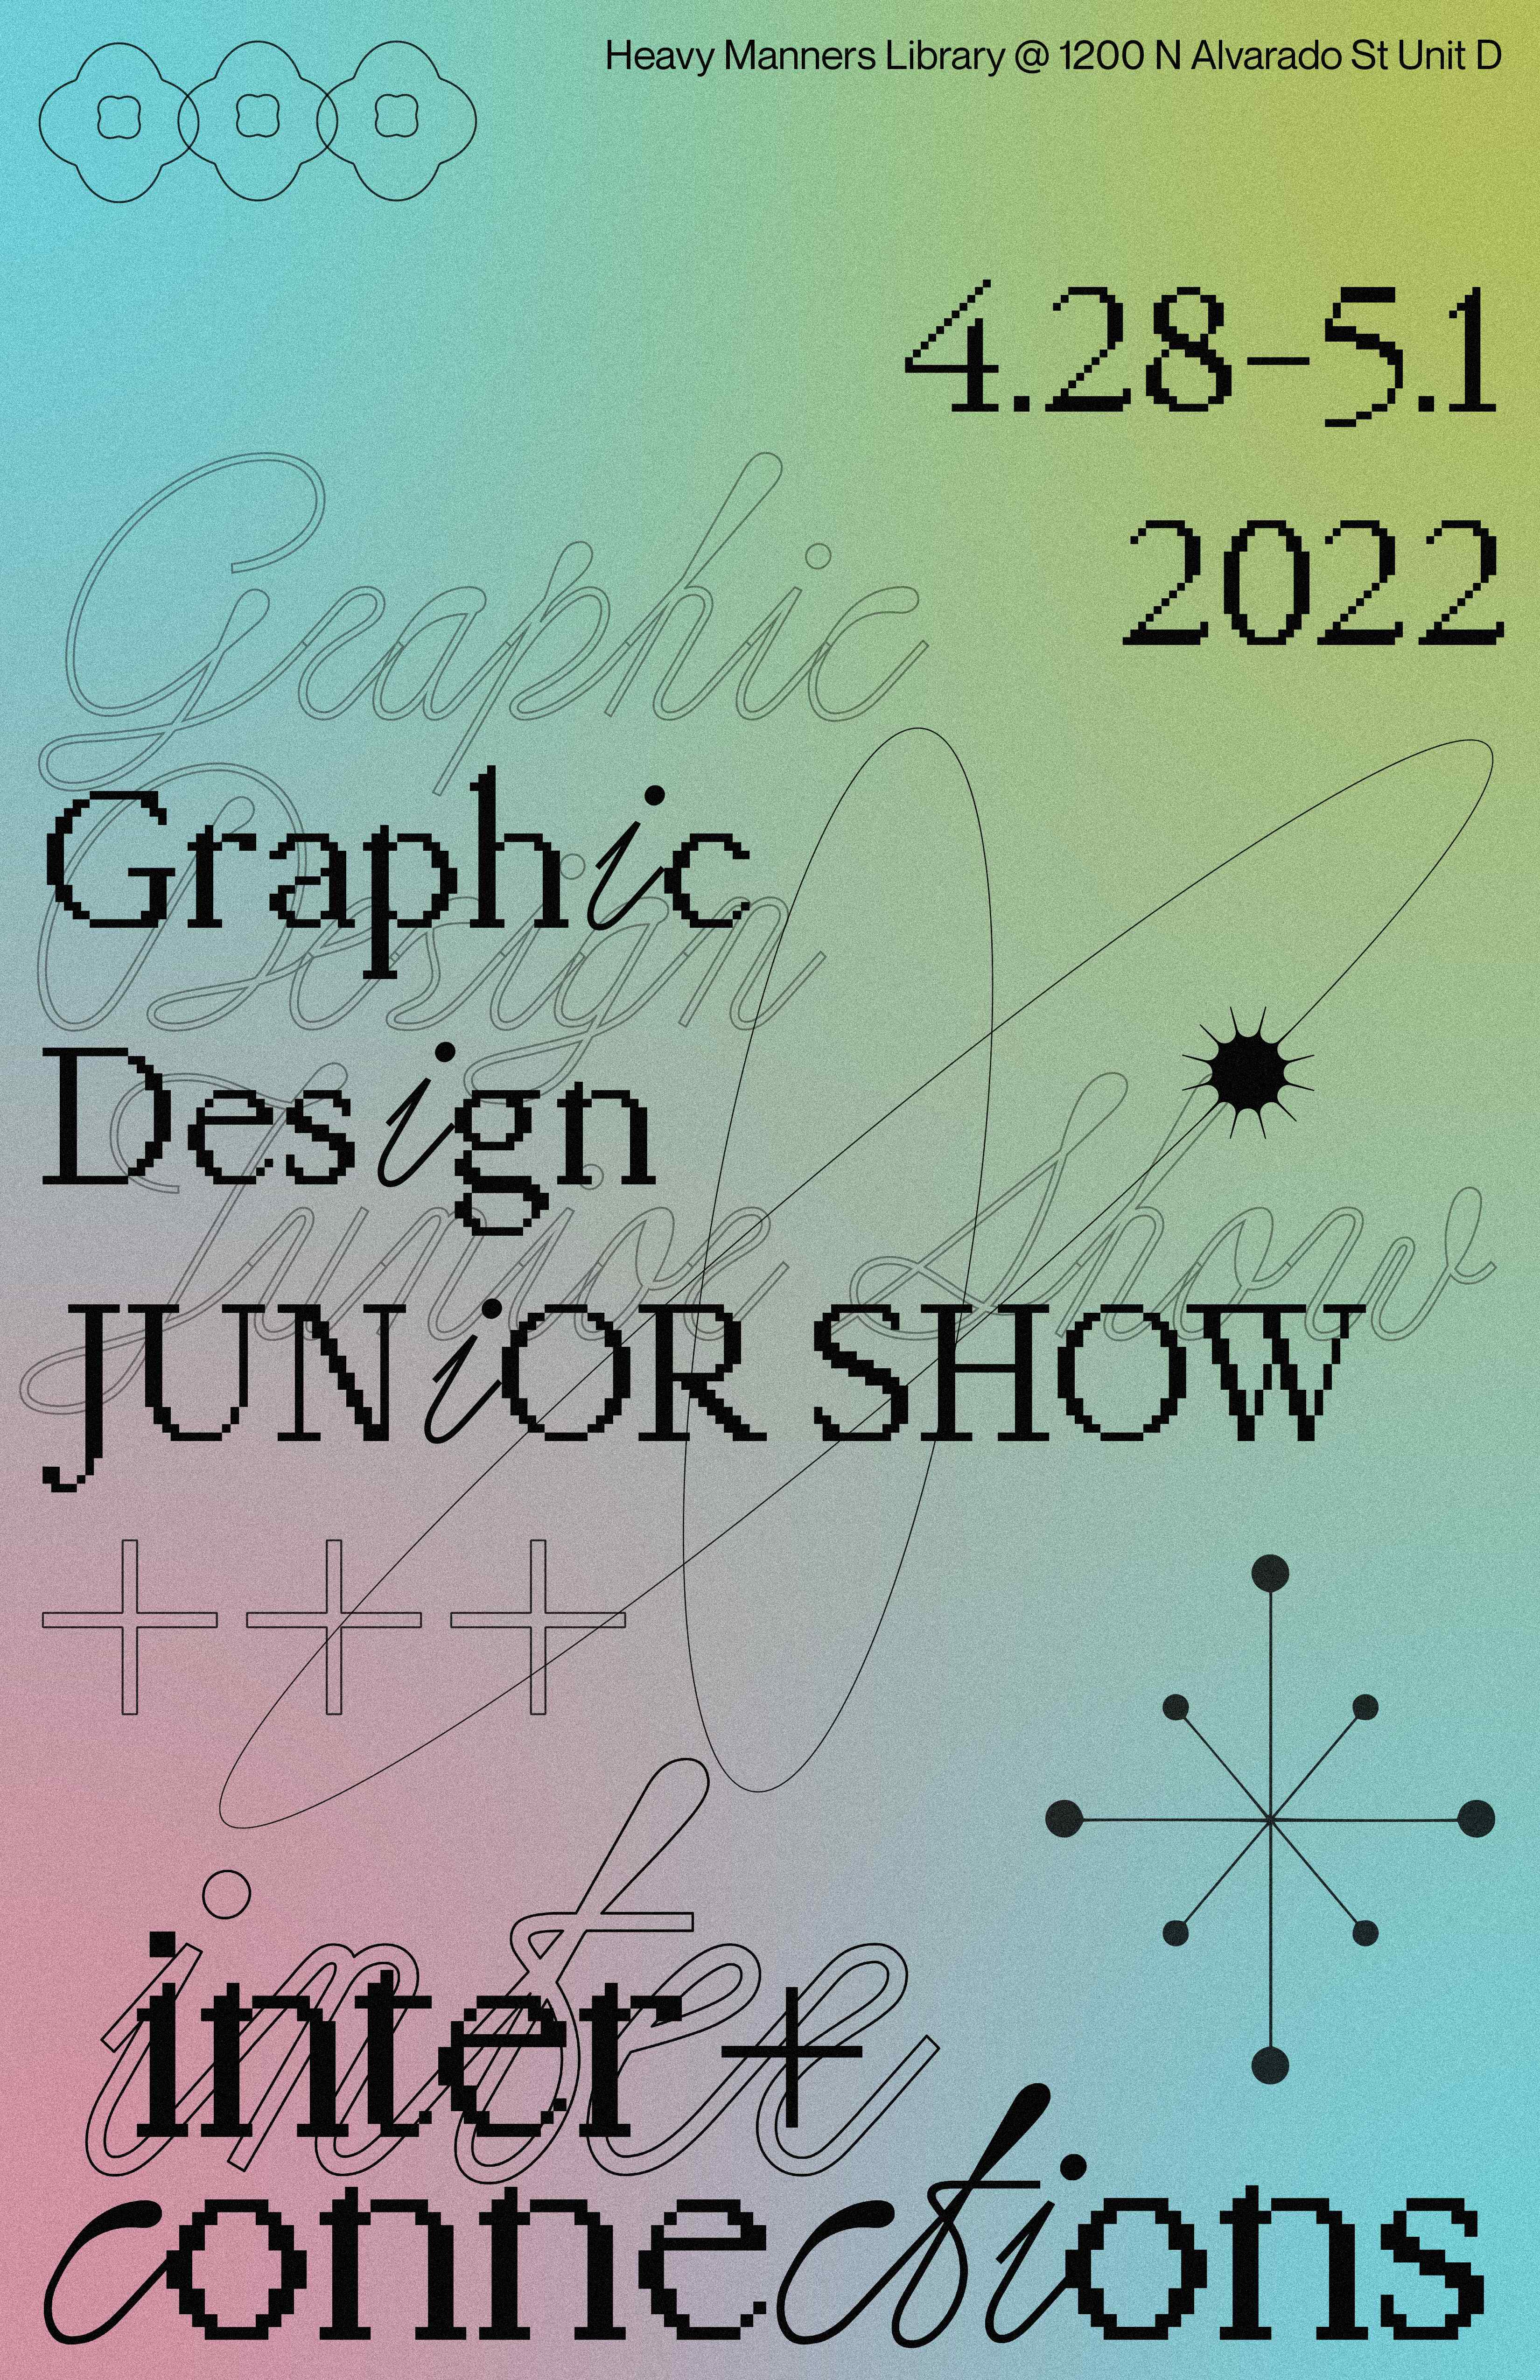 Communication Arts Graphic Design Junior Show: inter + connections